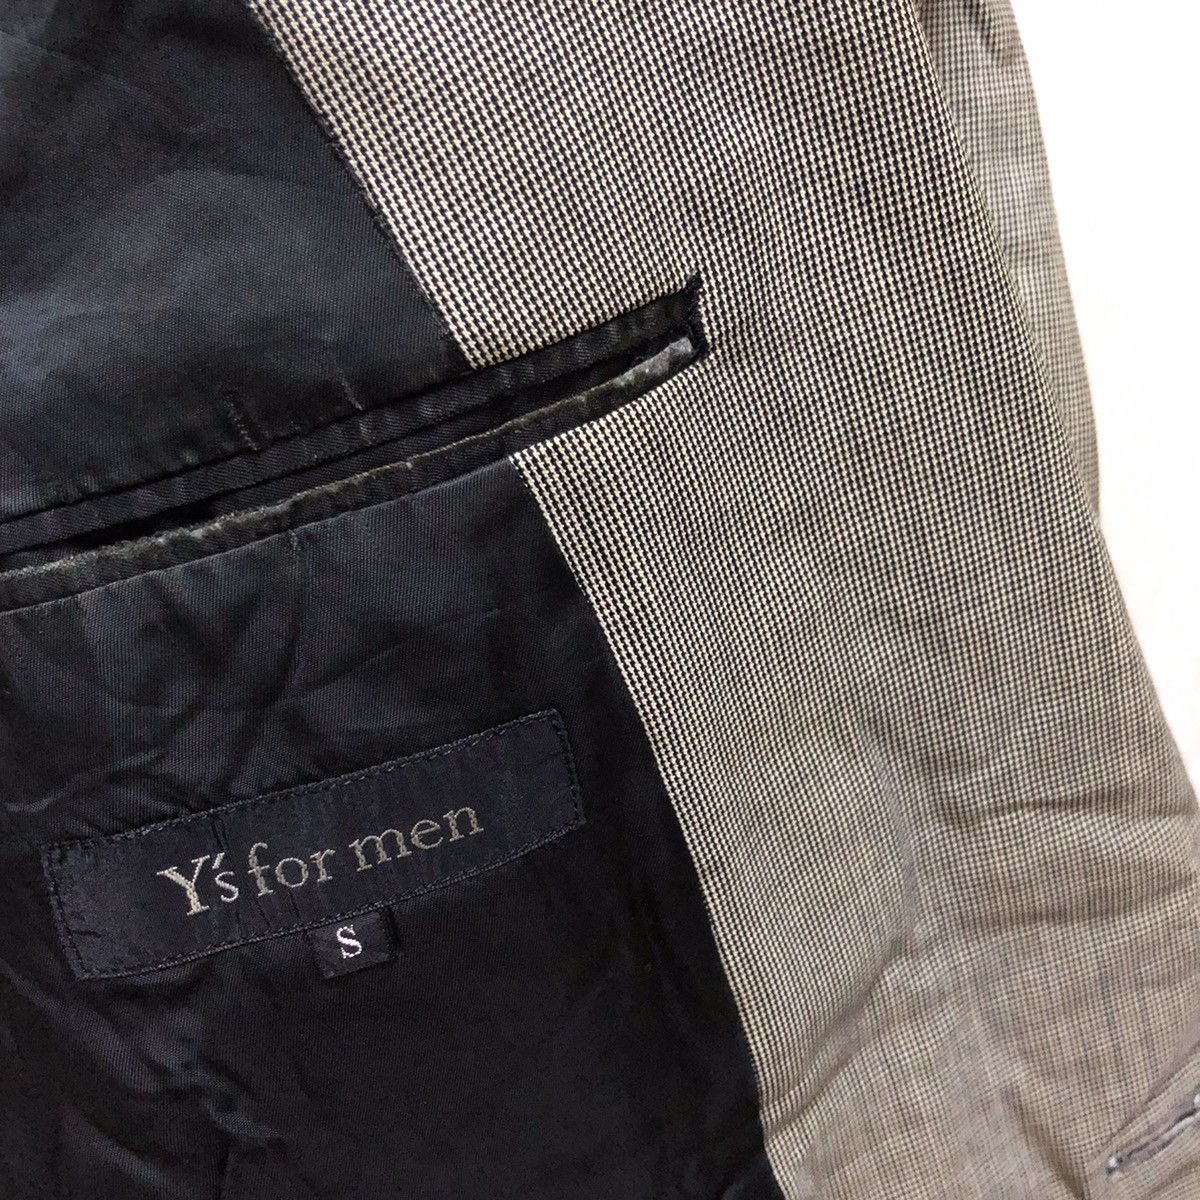 Vintage y’s for men distrested wool suit jacket - 6